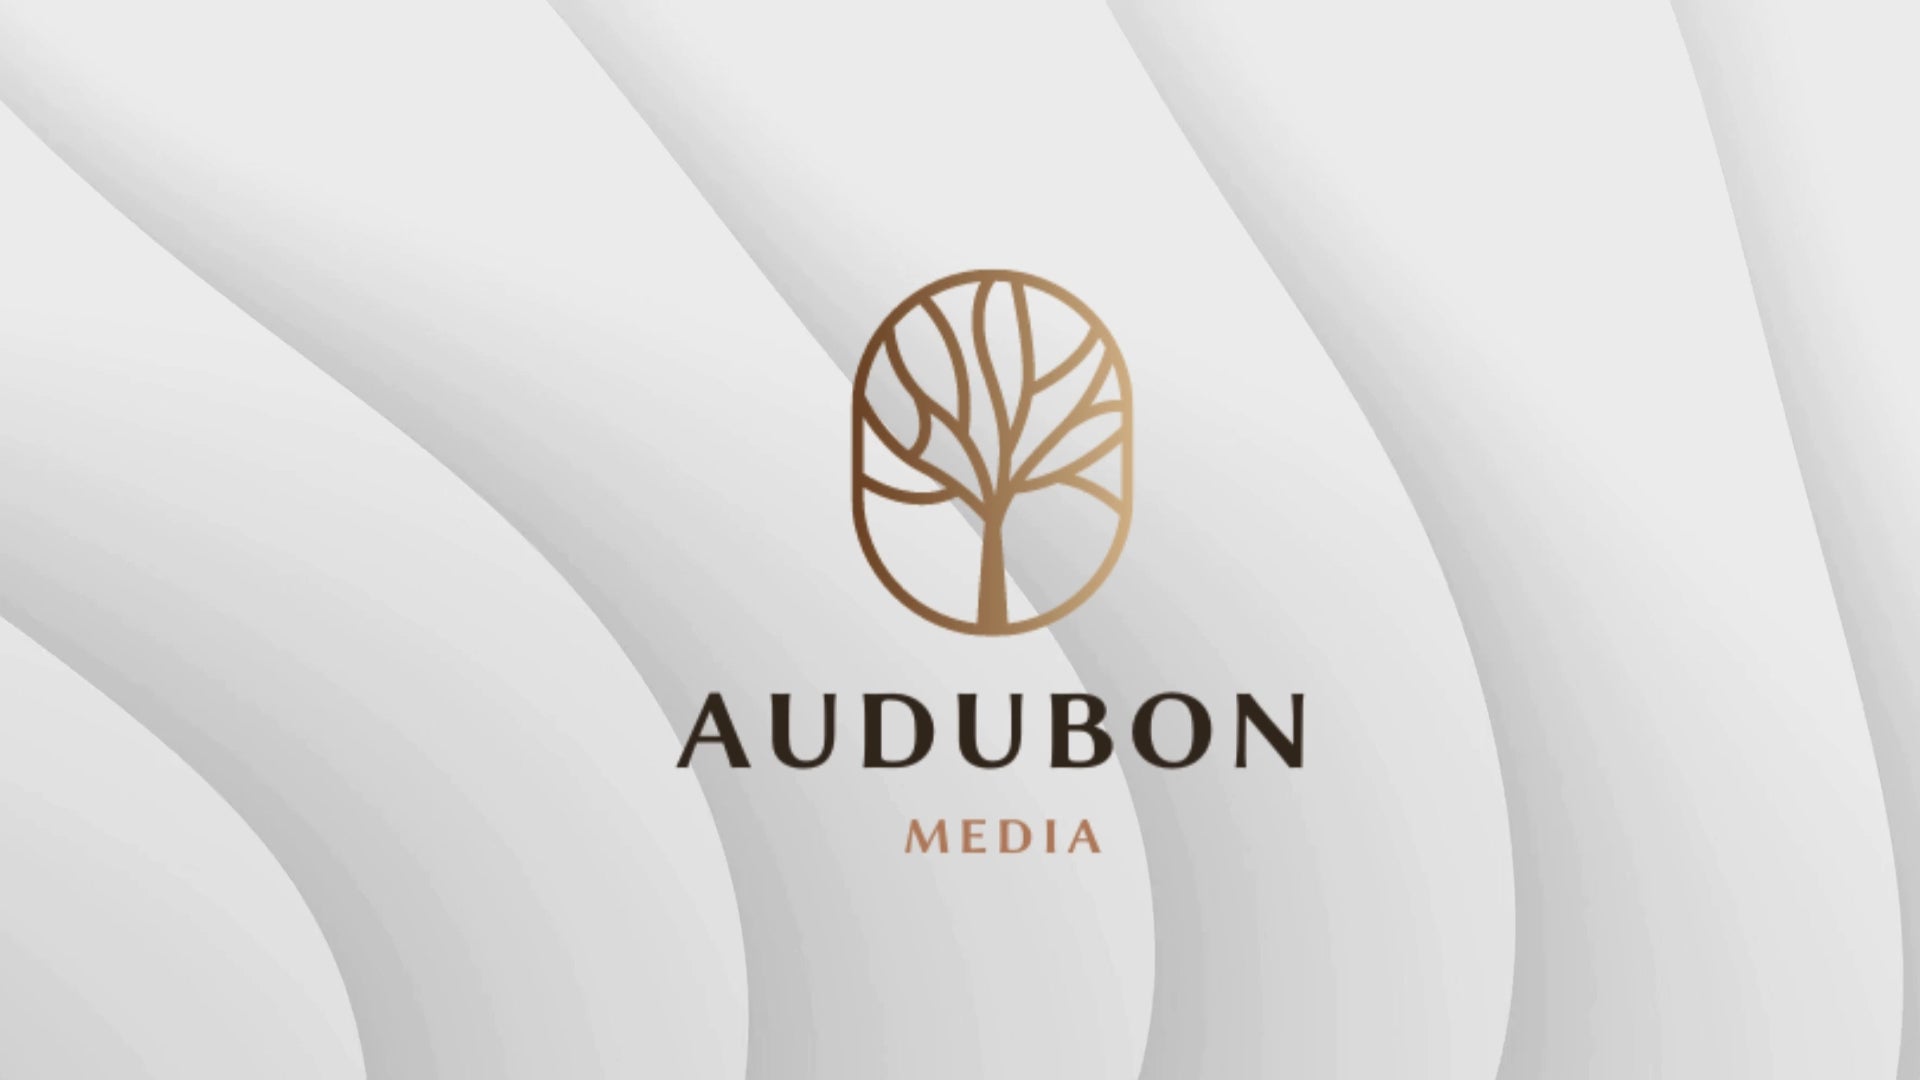 Load video: Audubon-Media-Advertising-Social-Media-Management-Ditigal-Marketing-Website-Design-Consulting